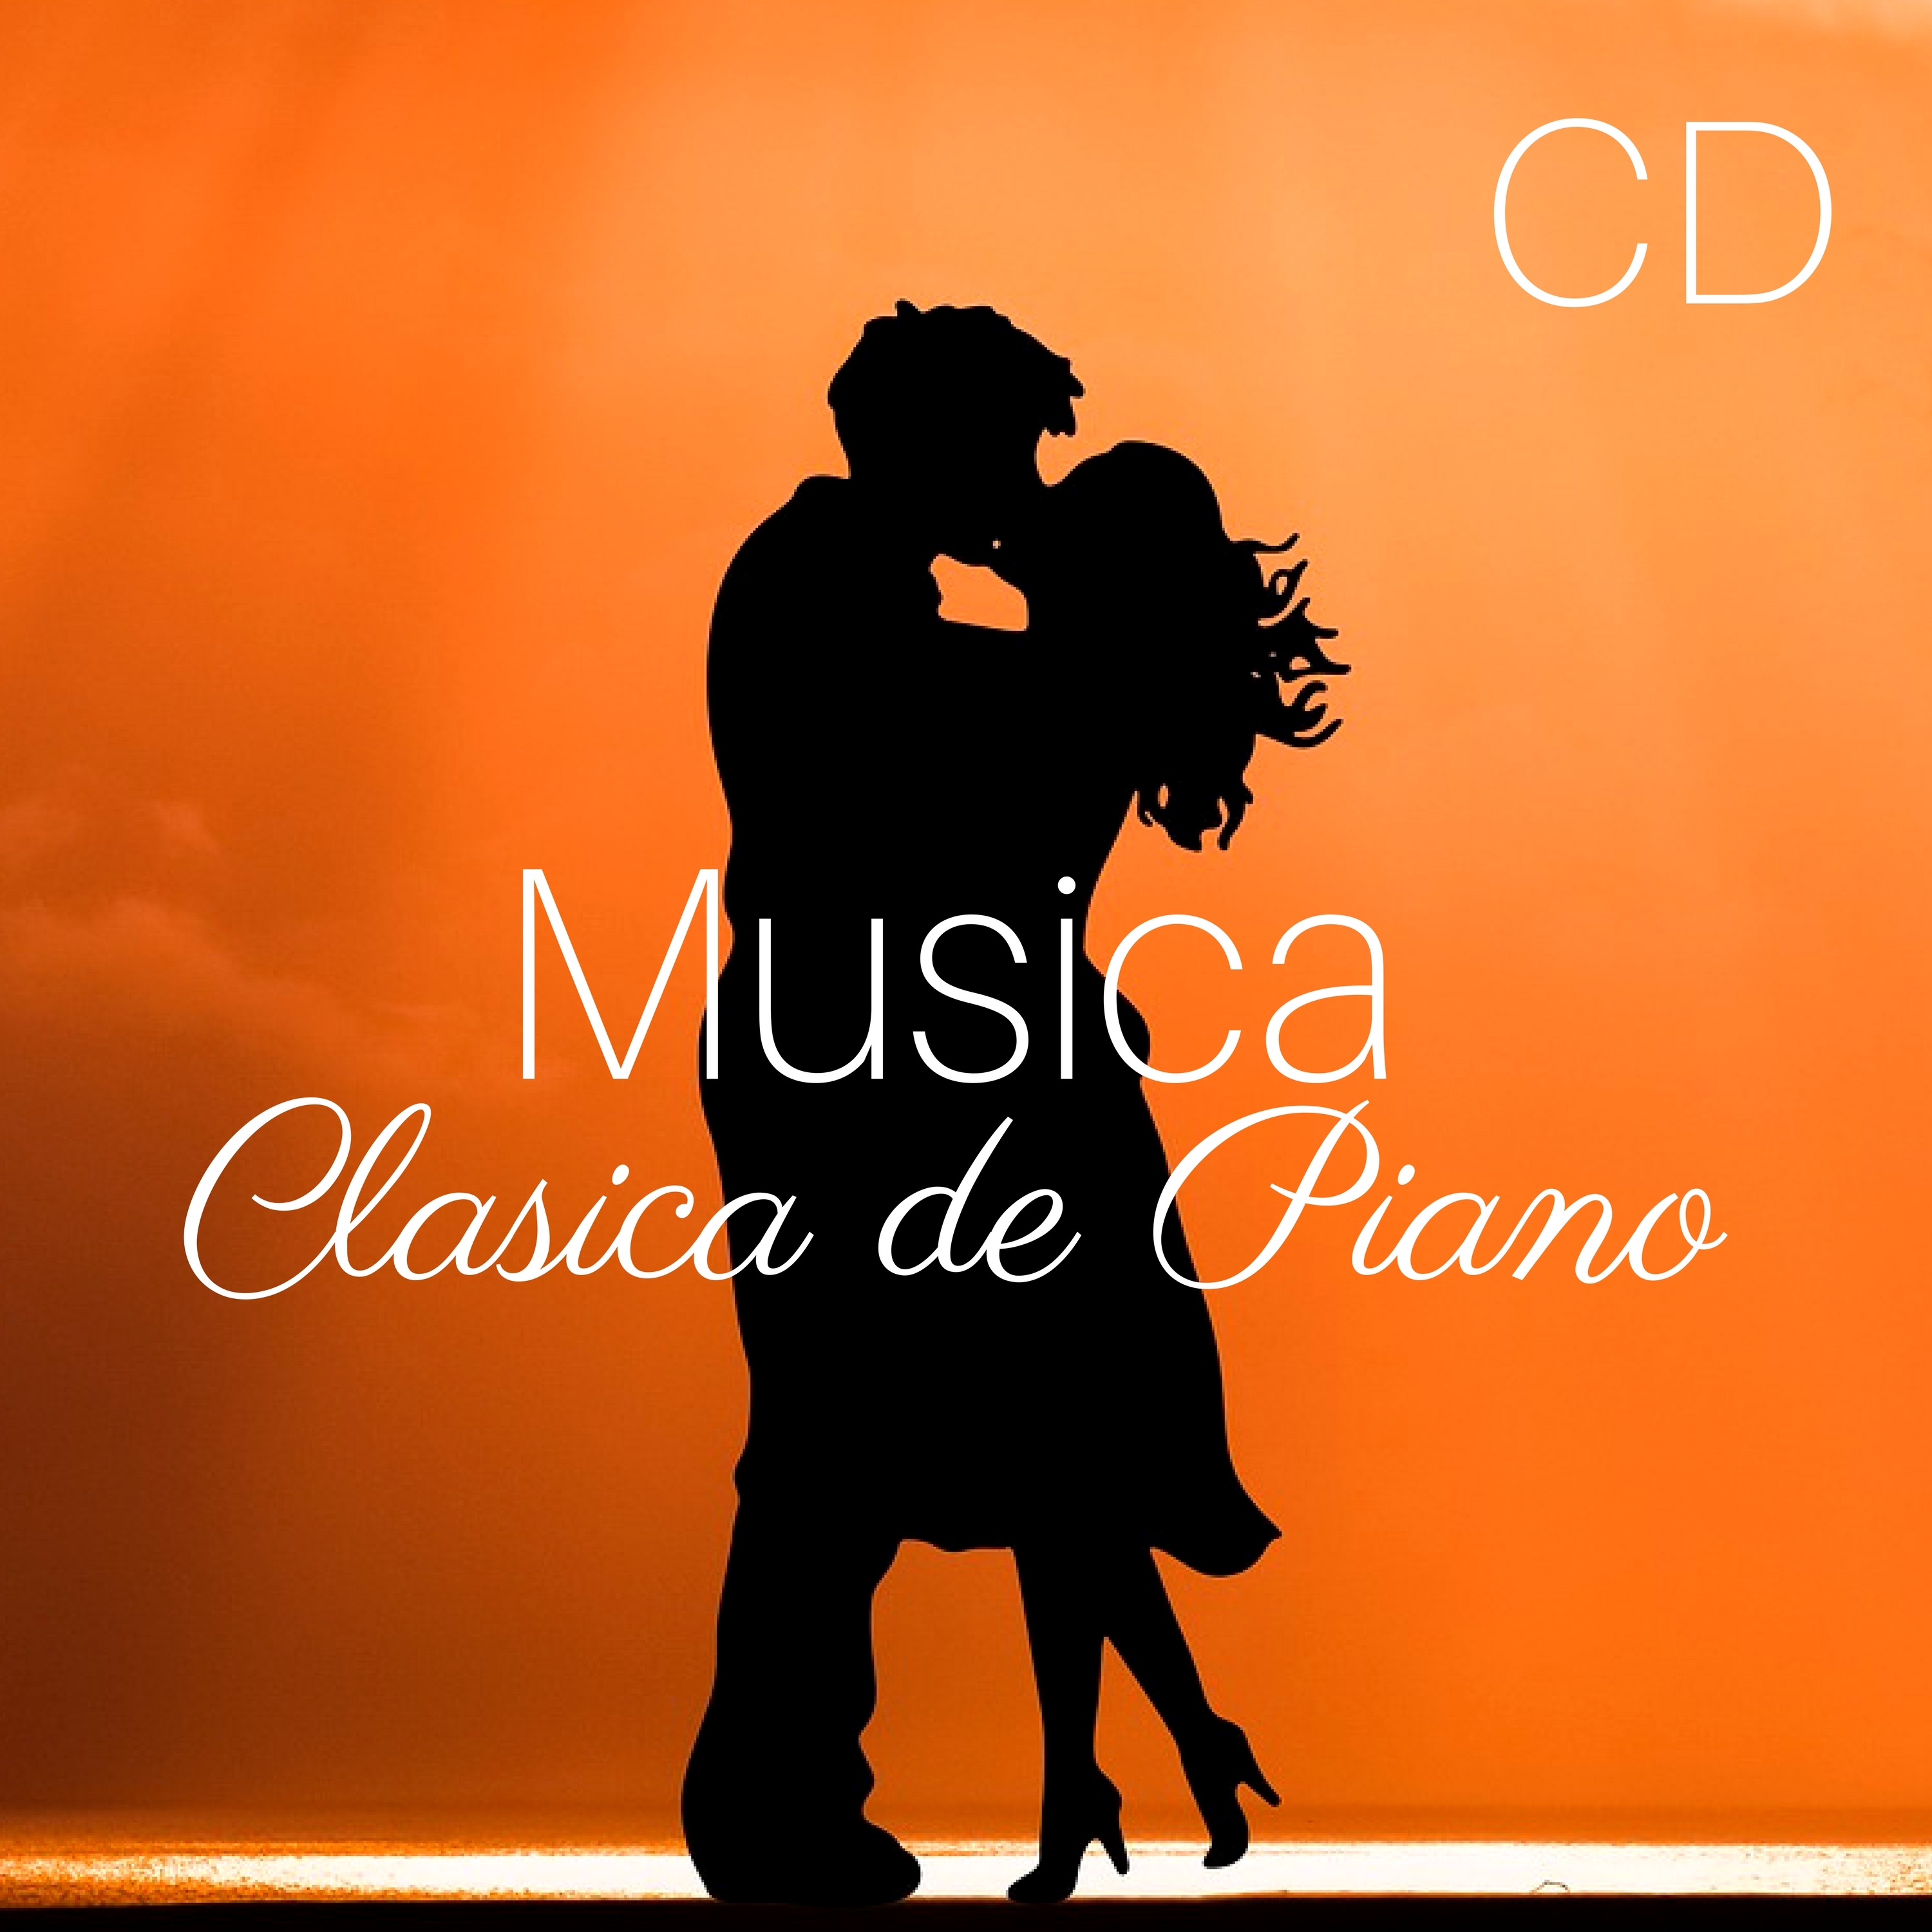 Musica Clasica CD de Piano - Coleccion Española